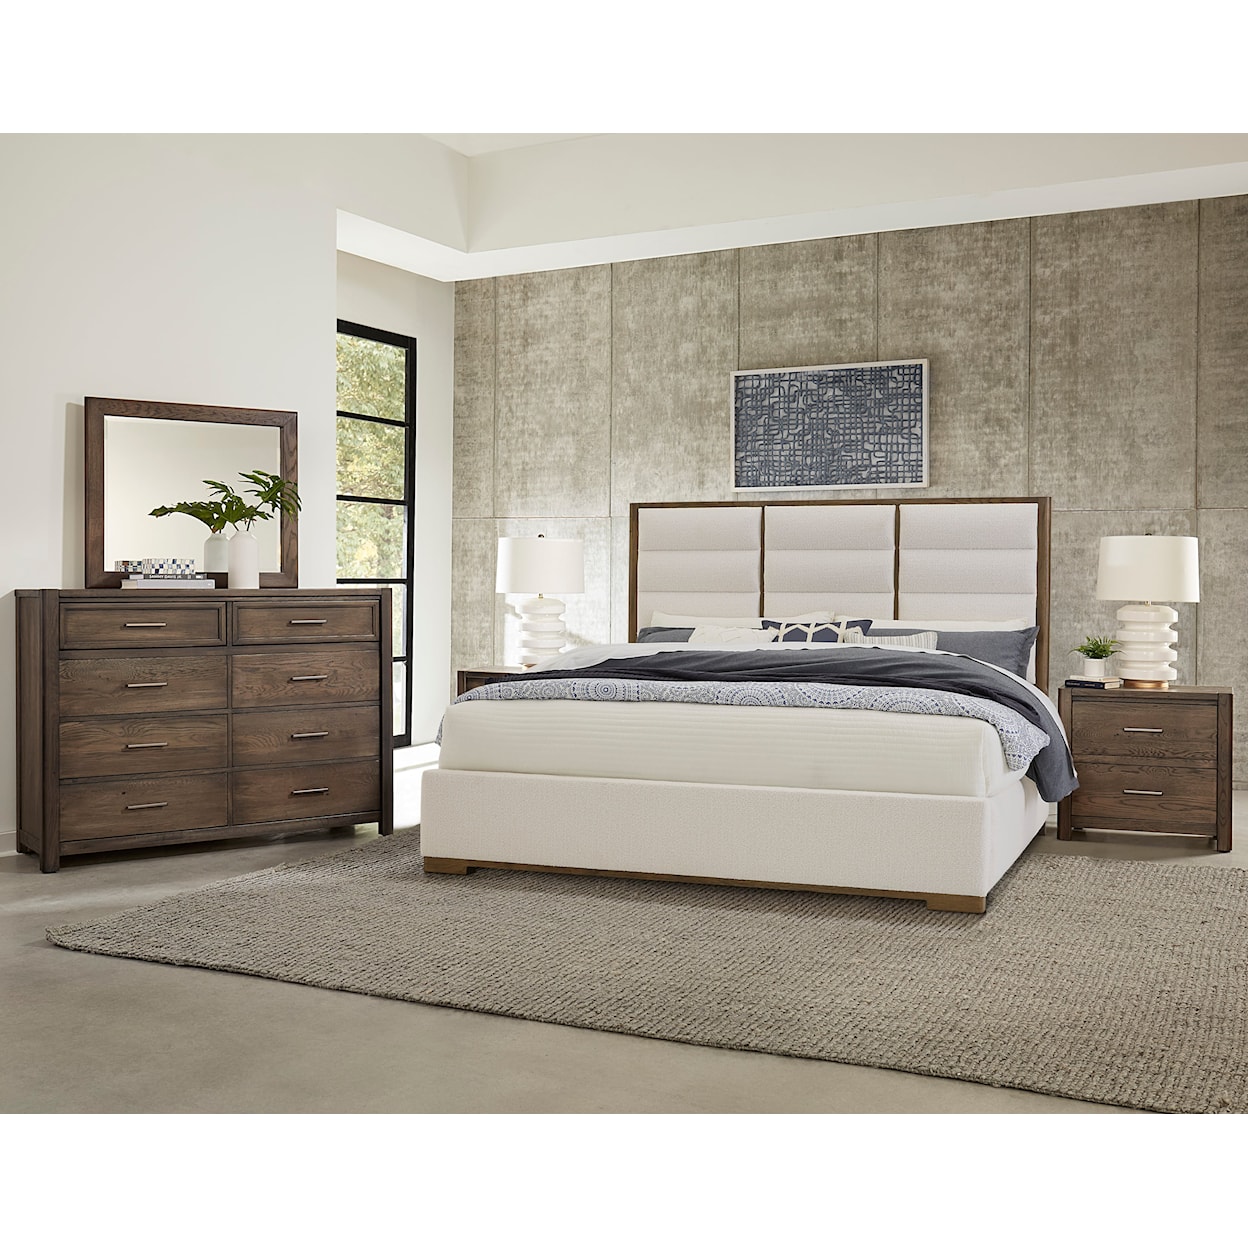 Vaughan Bassett Crafted Oak - Aged Grey King Bedroom Set